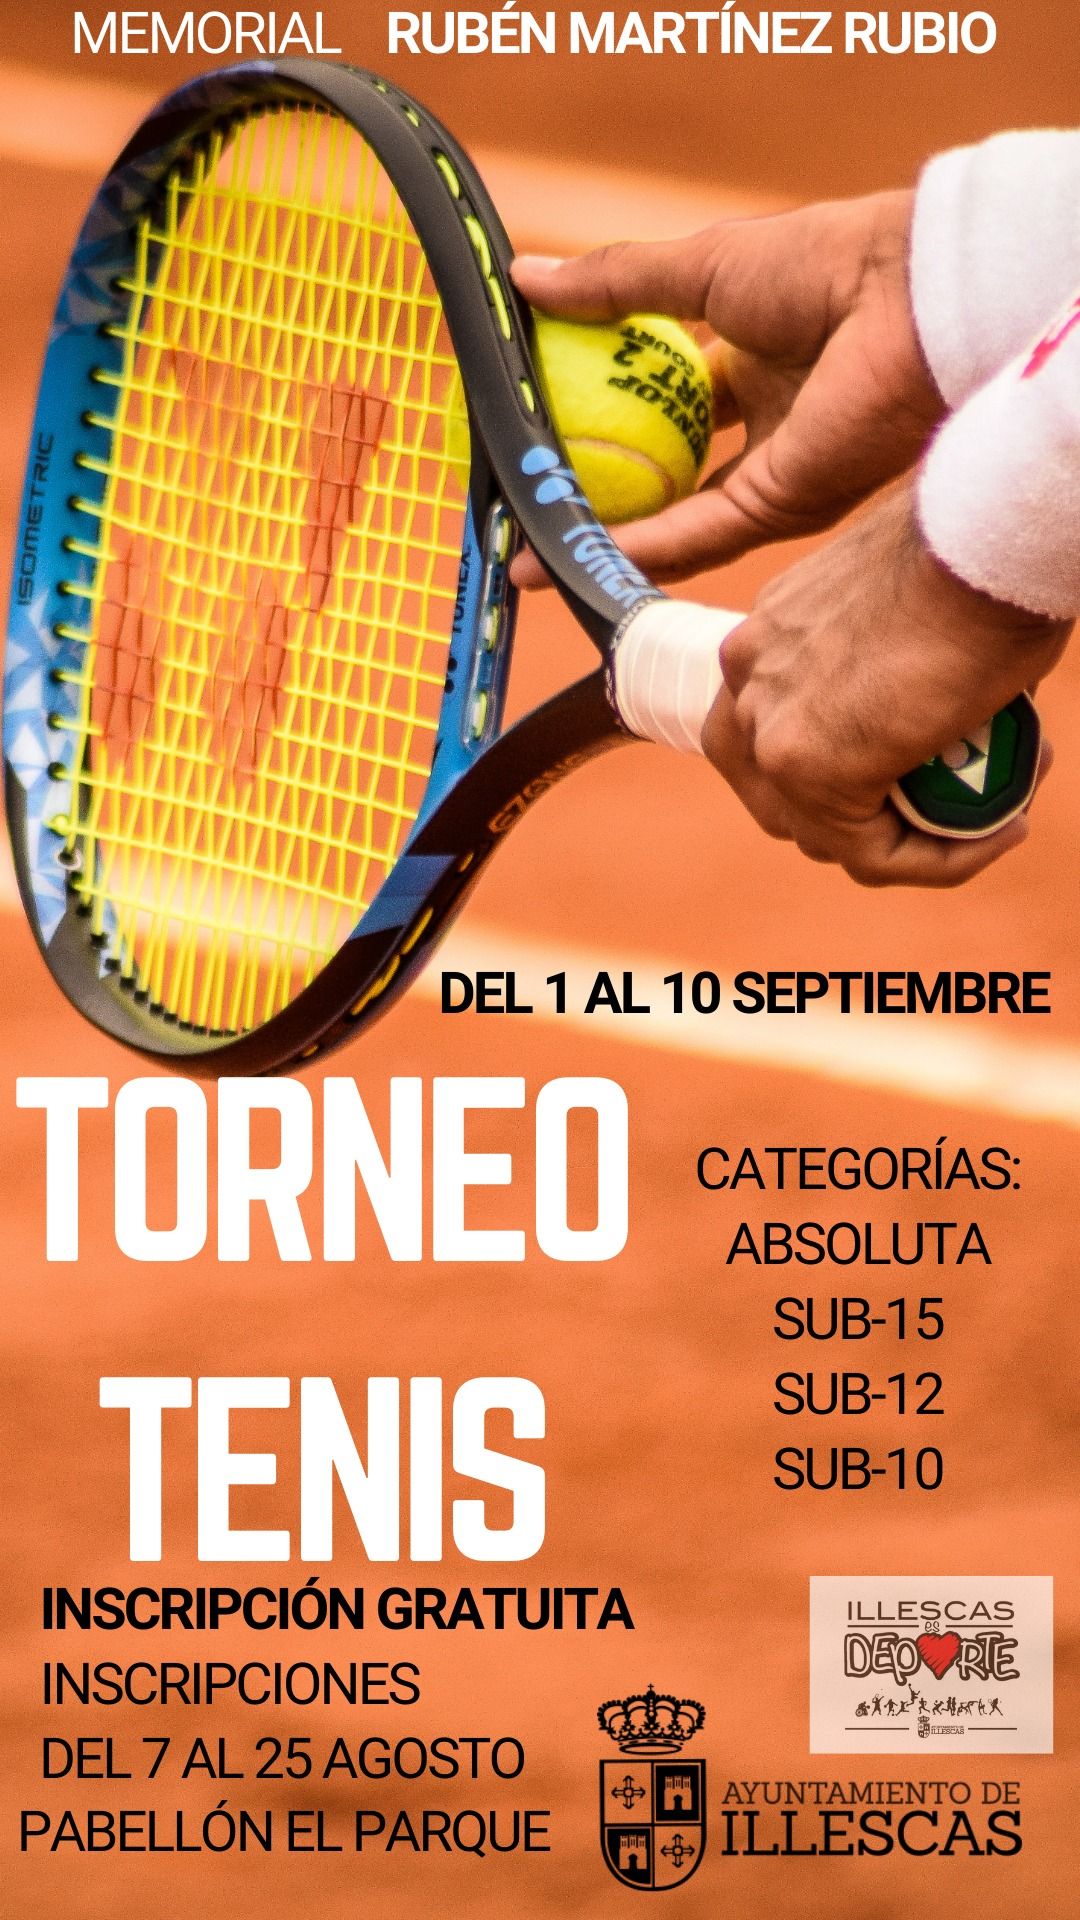 Torneo tenis Illescas Memorial Ruben Martinez Rubio